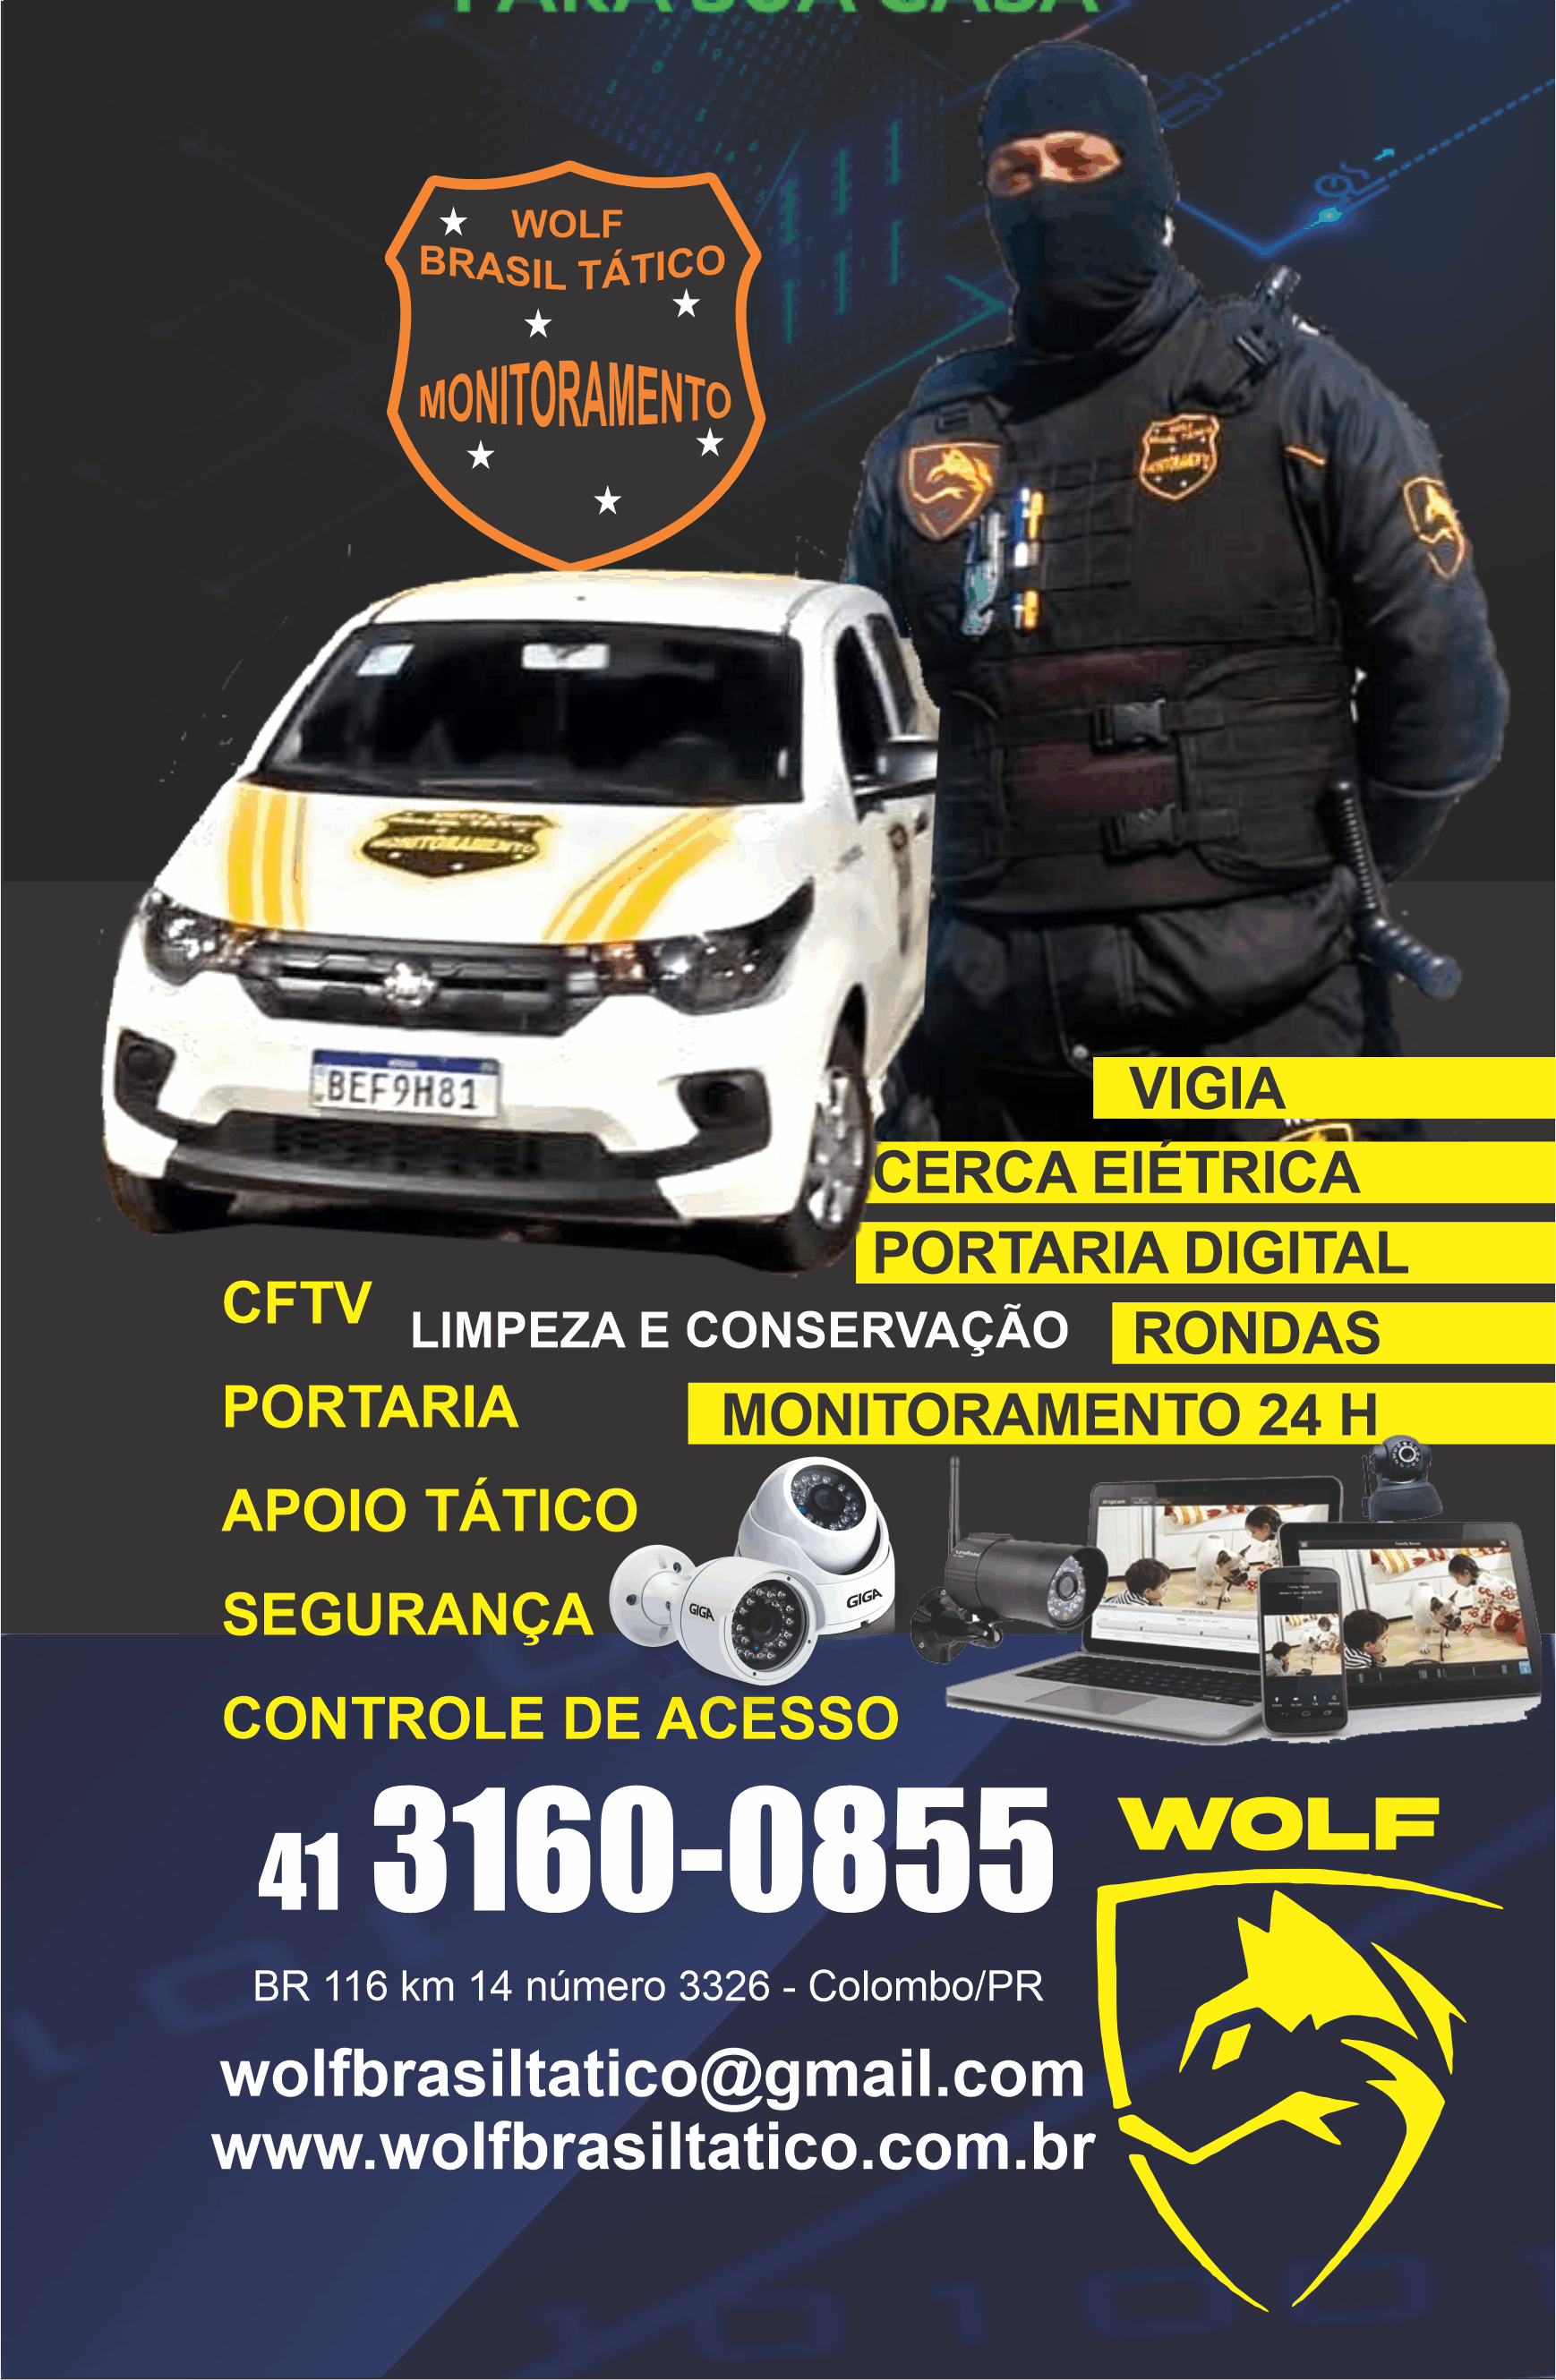 Wolf Brasil Tático Monitoramento      RUA BUENOS AIRES, 3326, COLOMBO - PR  Fones: (41)3160-0855 /